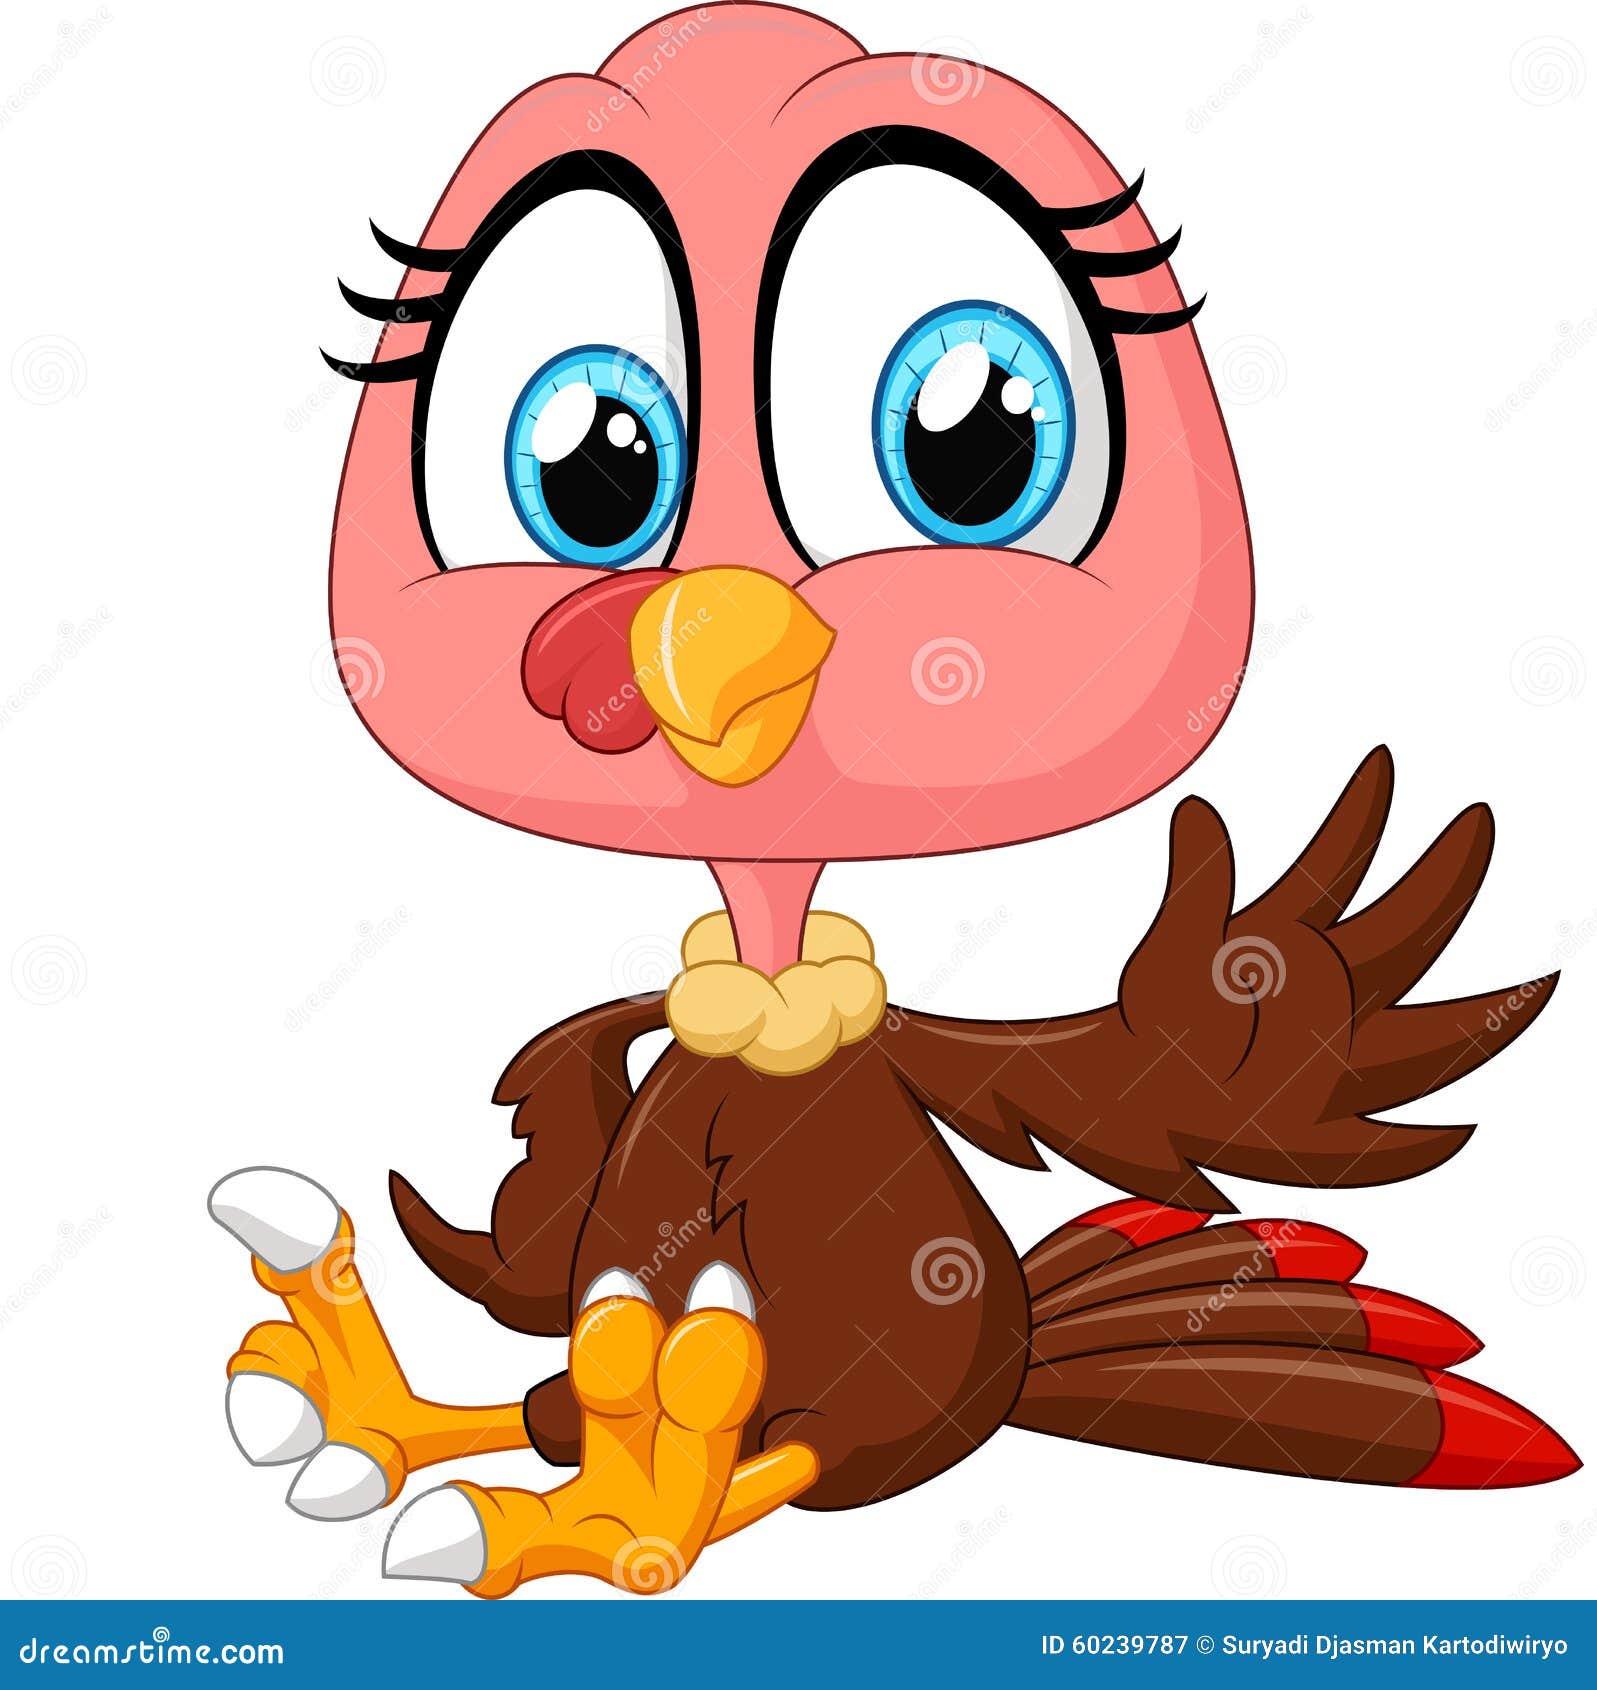 Cute turkey cartoon stock illustration. Illustration of charming - 60239787